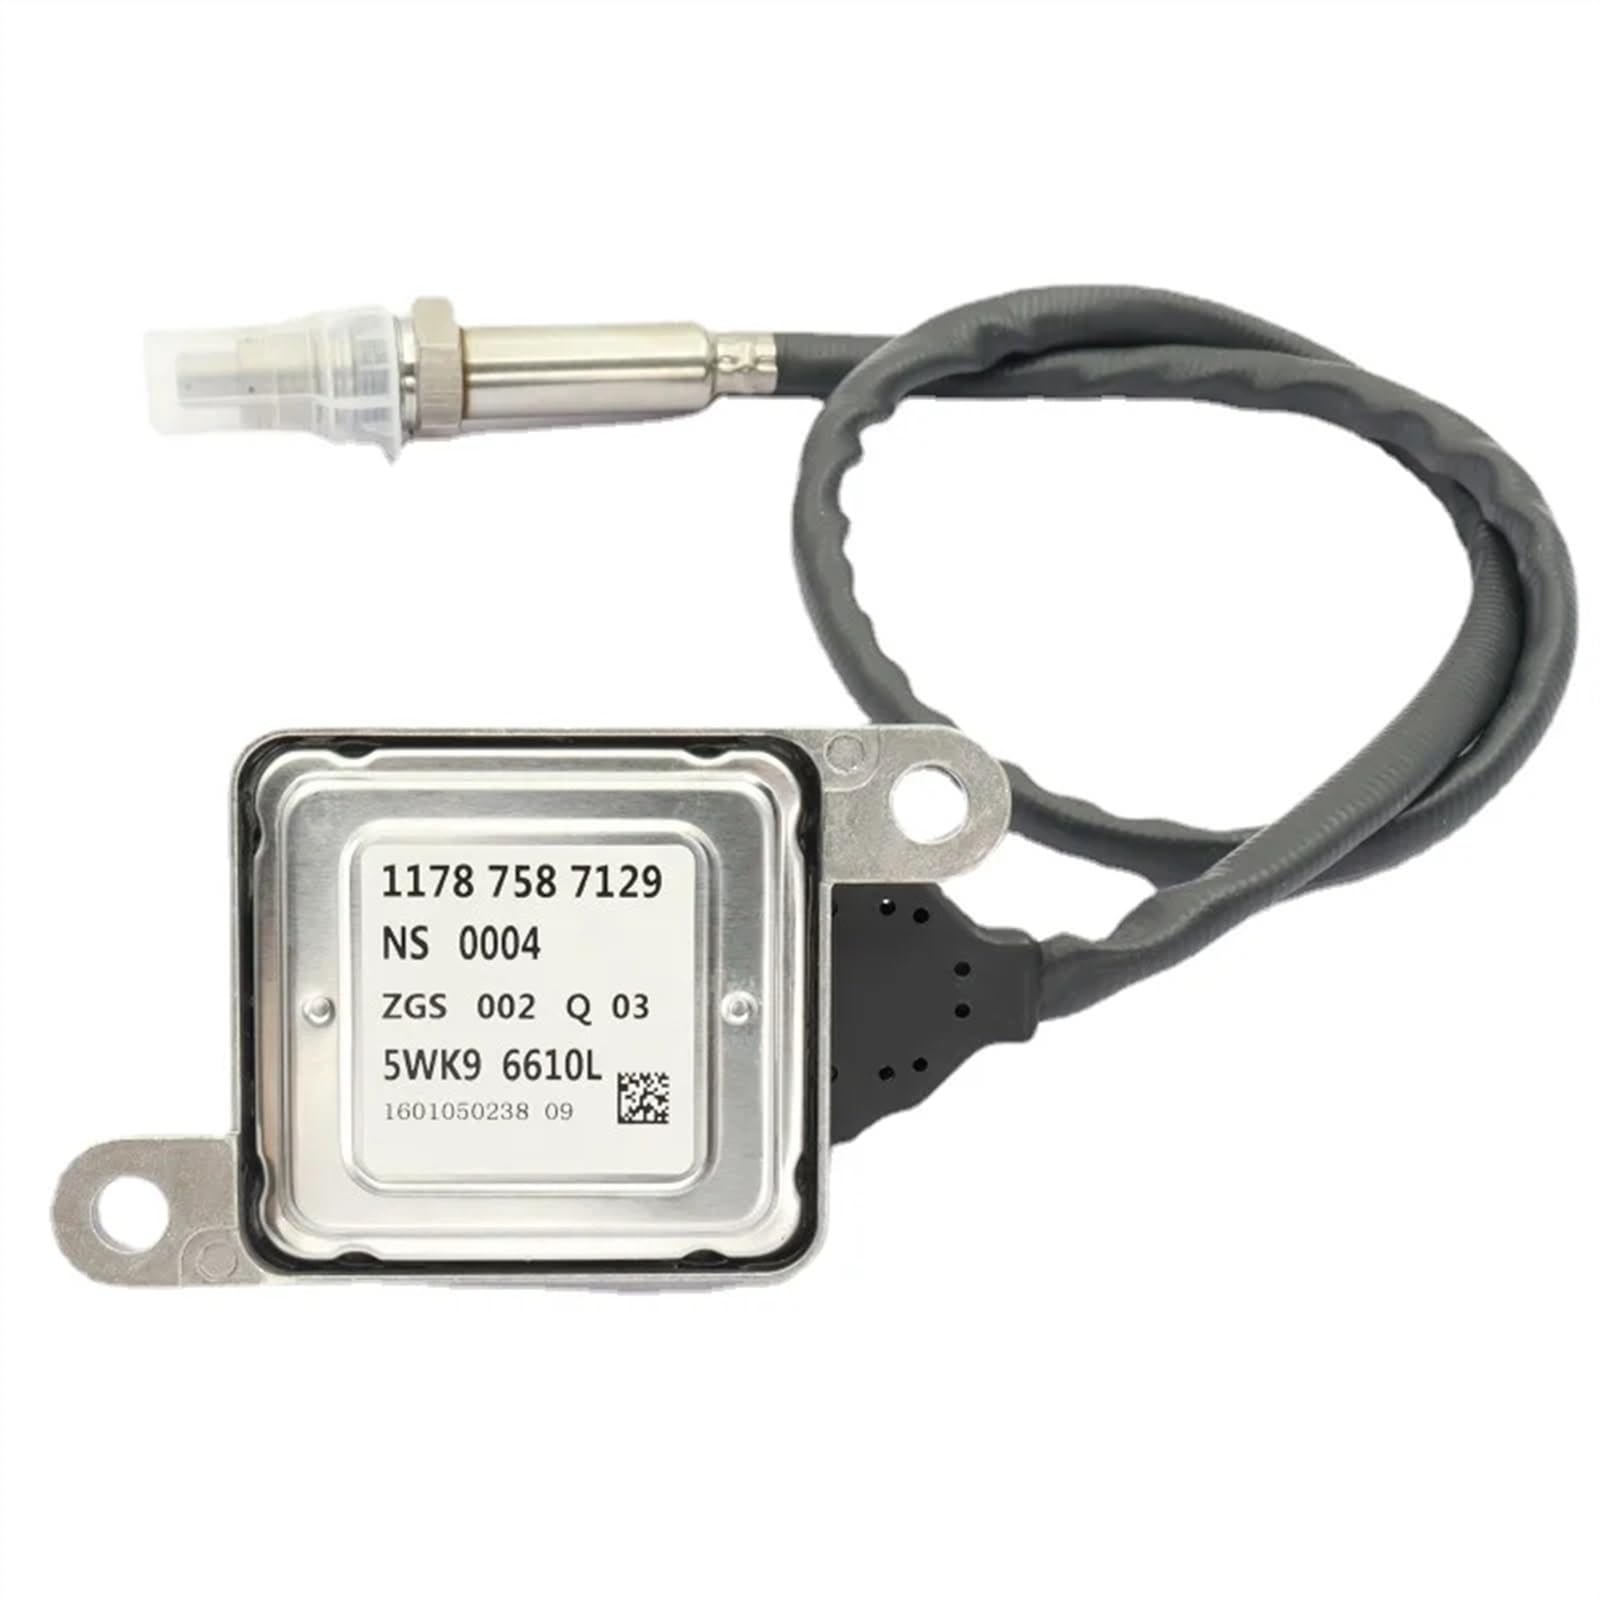 NOX Stickoxidsensor Kompatibel Mit E90 E91 E92 E93 E60 E61 N53 Stickstoff-Sauerstoff-Sensor Nox-Sensor 11787587129 5WK96610 5WK9 6610 von PUNICS